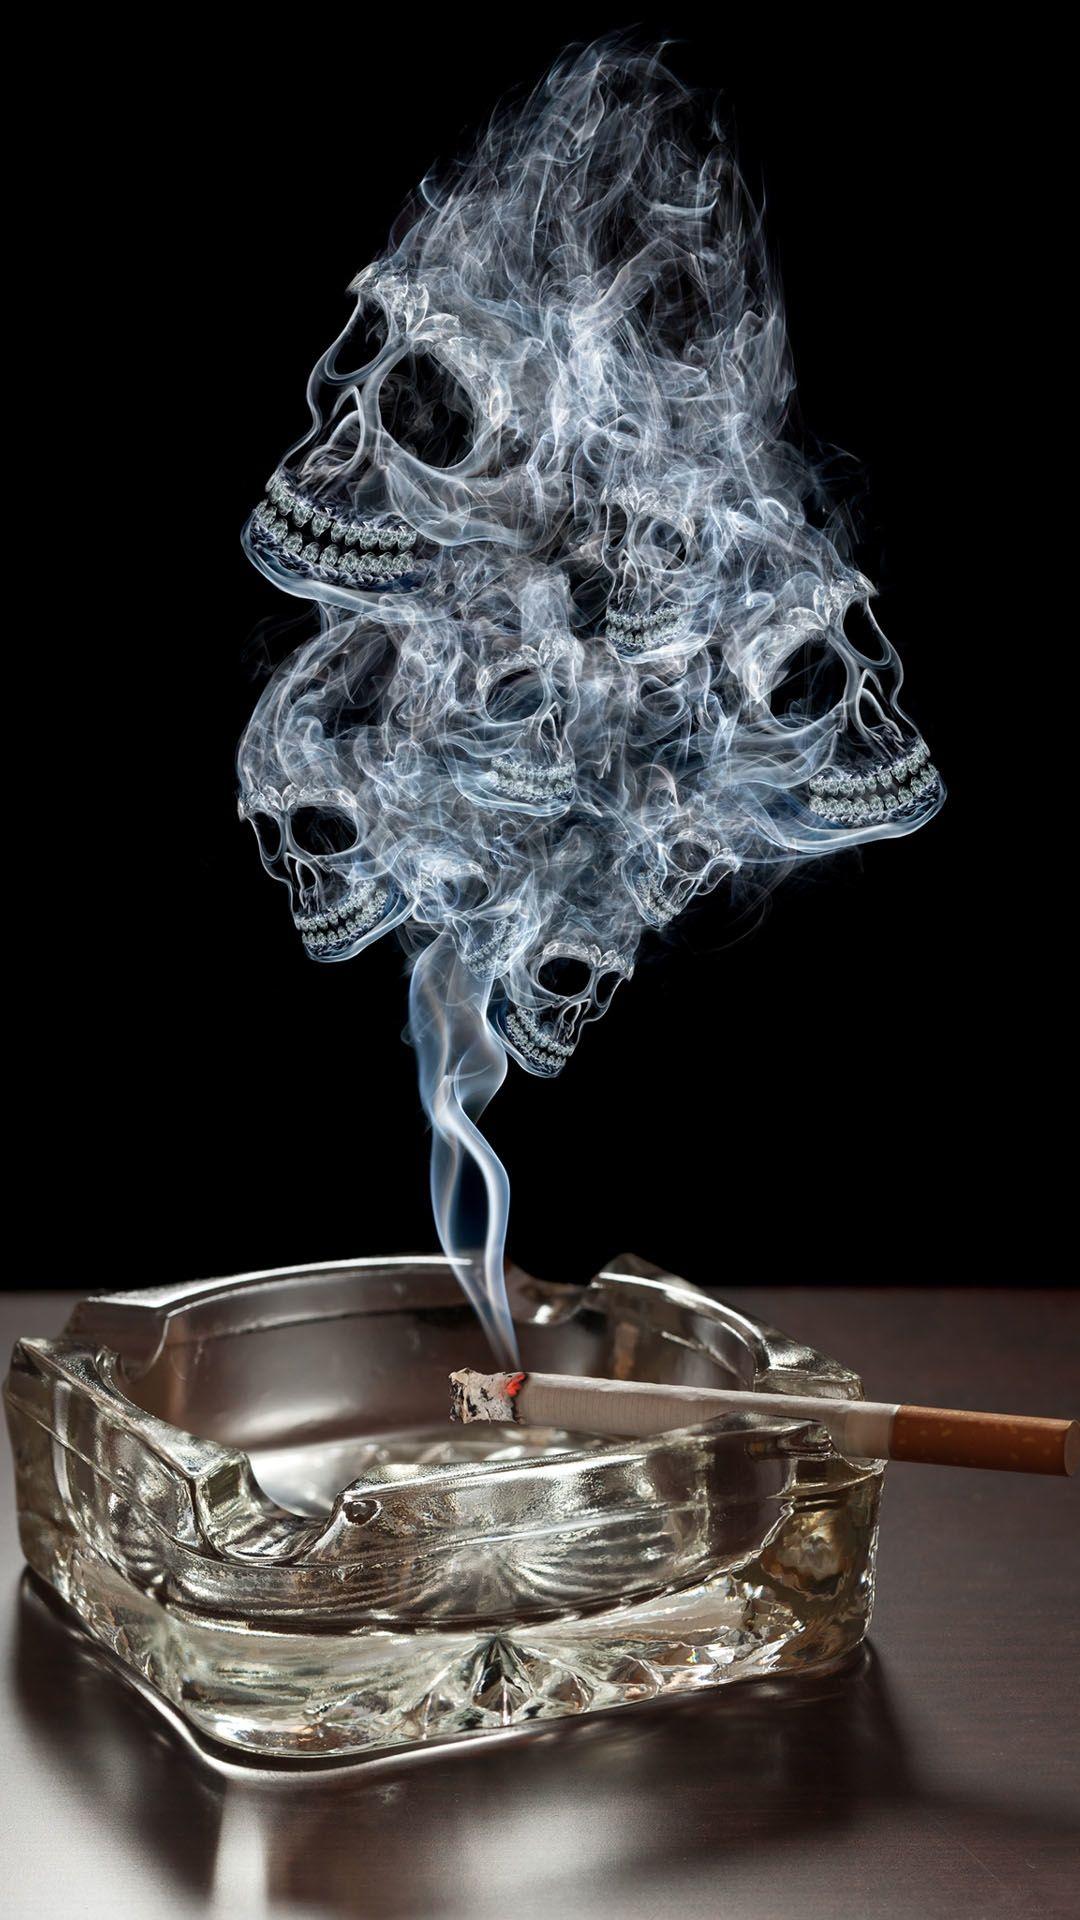 Smoke Skulls Ashtray Burning Cigarette Android Wallpaper free download